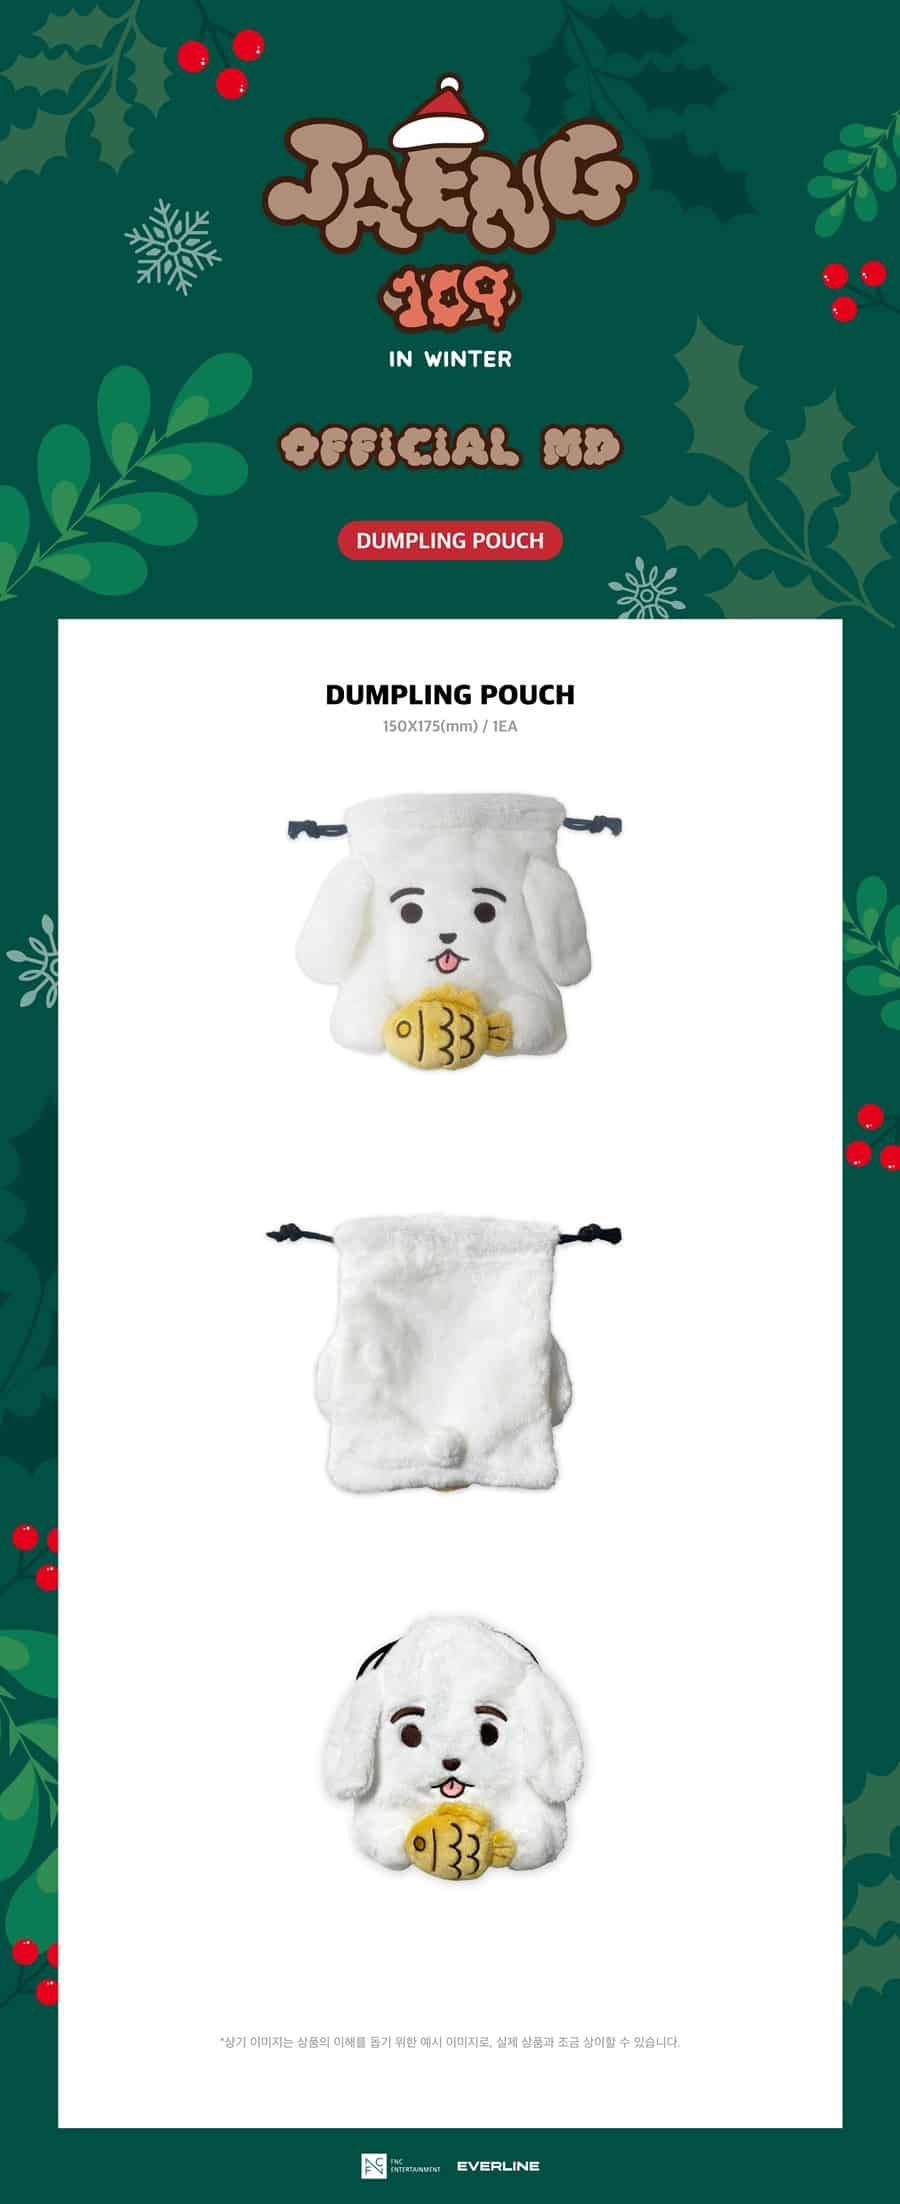 jaeng109-in-winter-pop-up-official-md-dumpling-pouch-wholesales